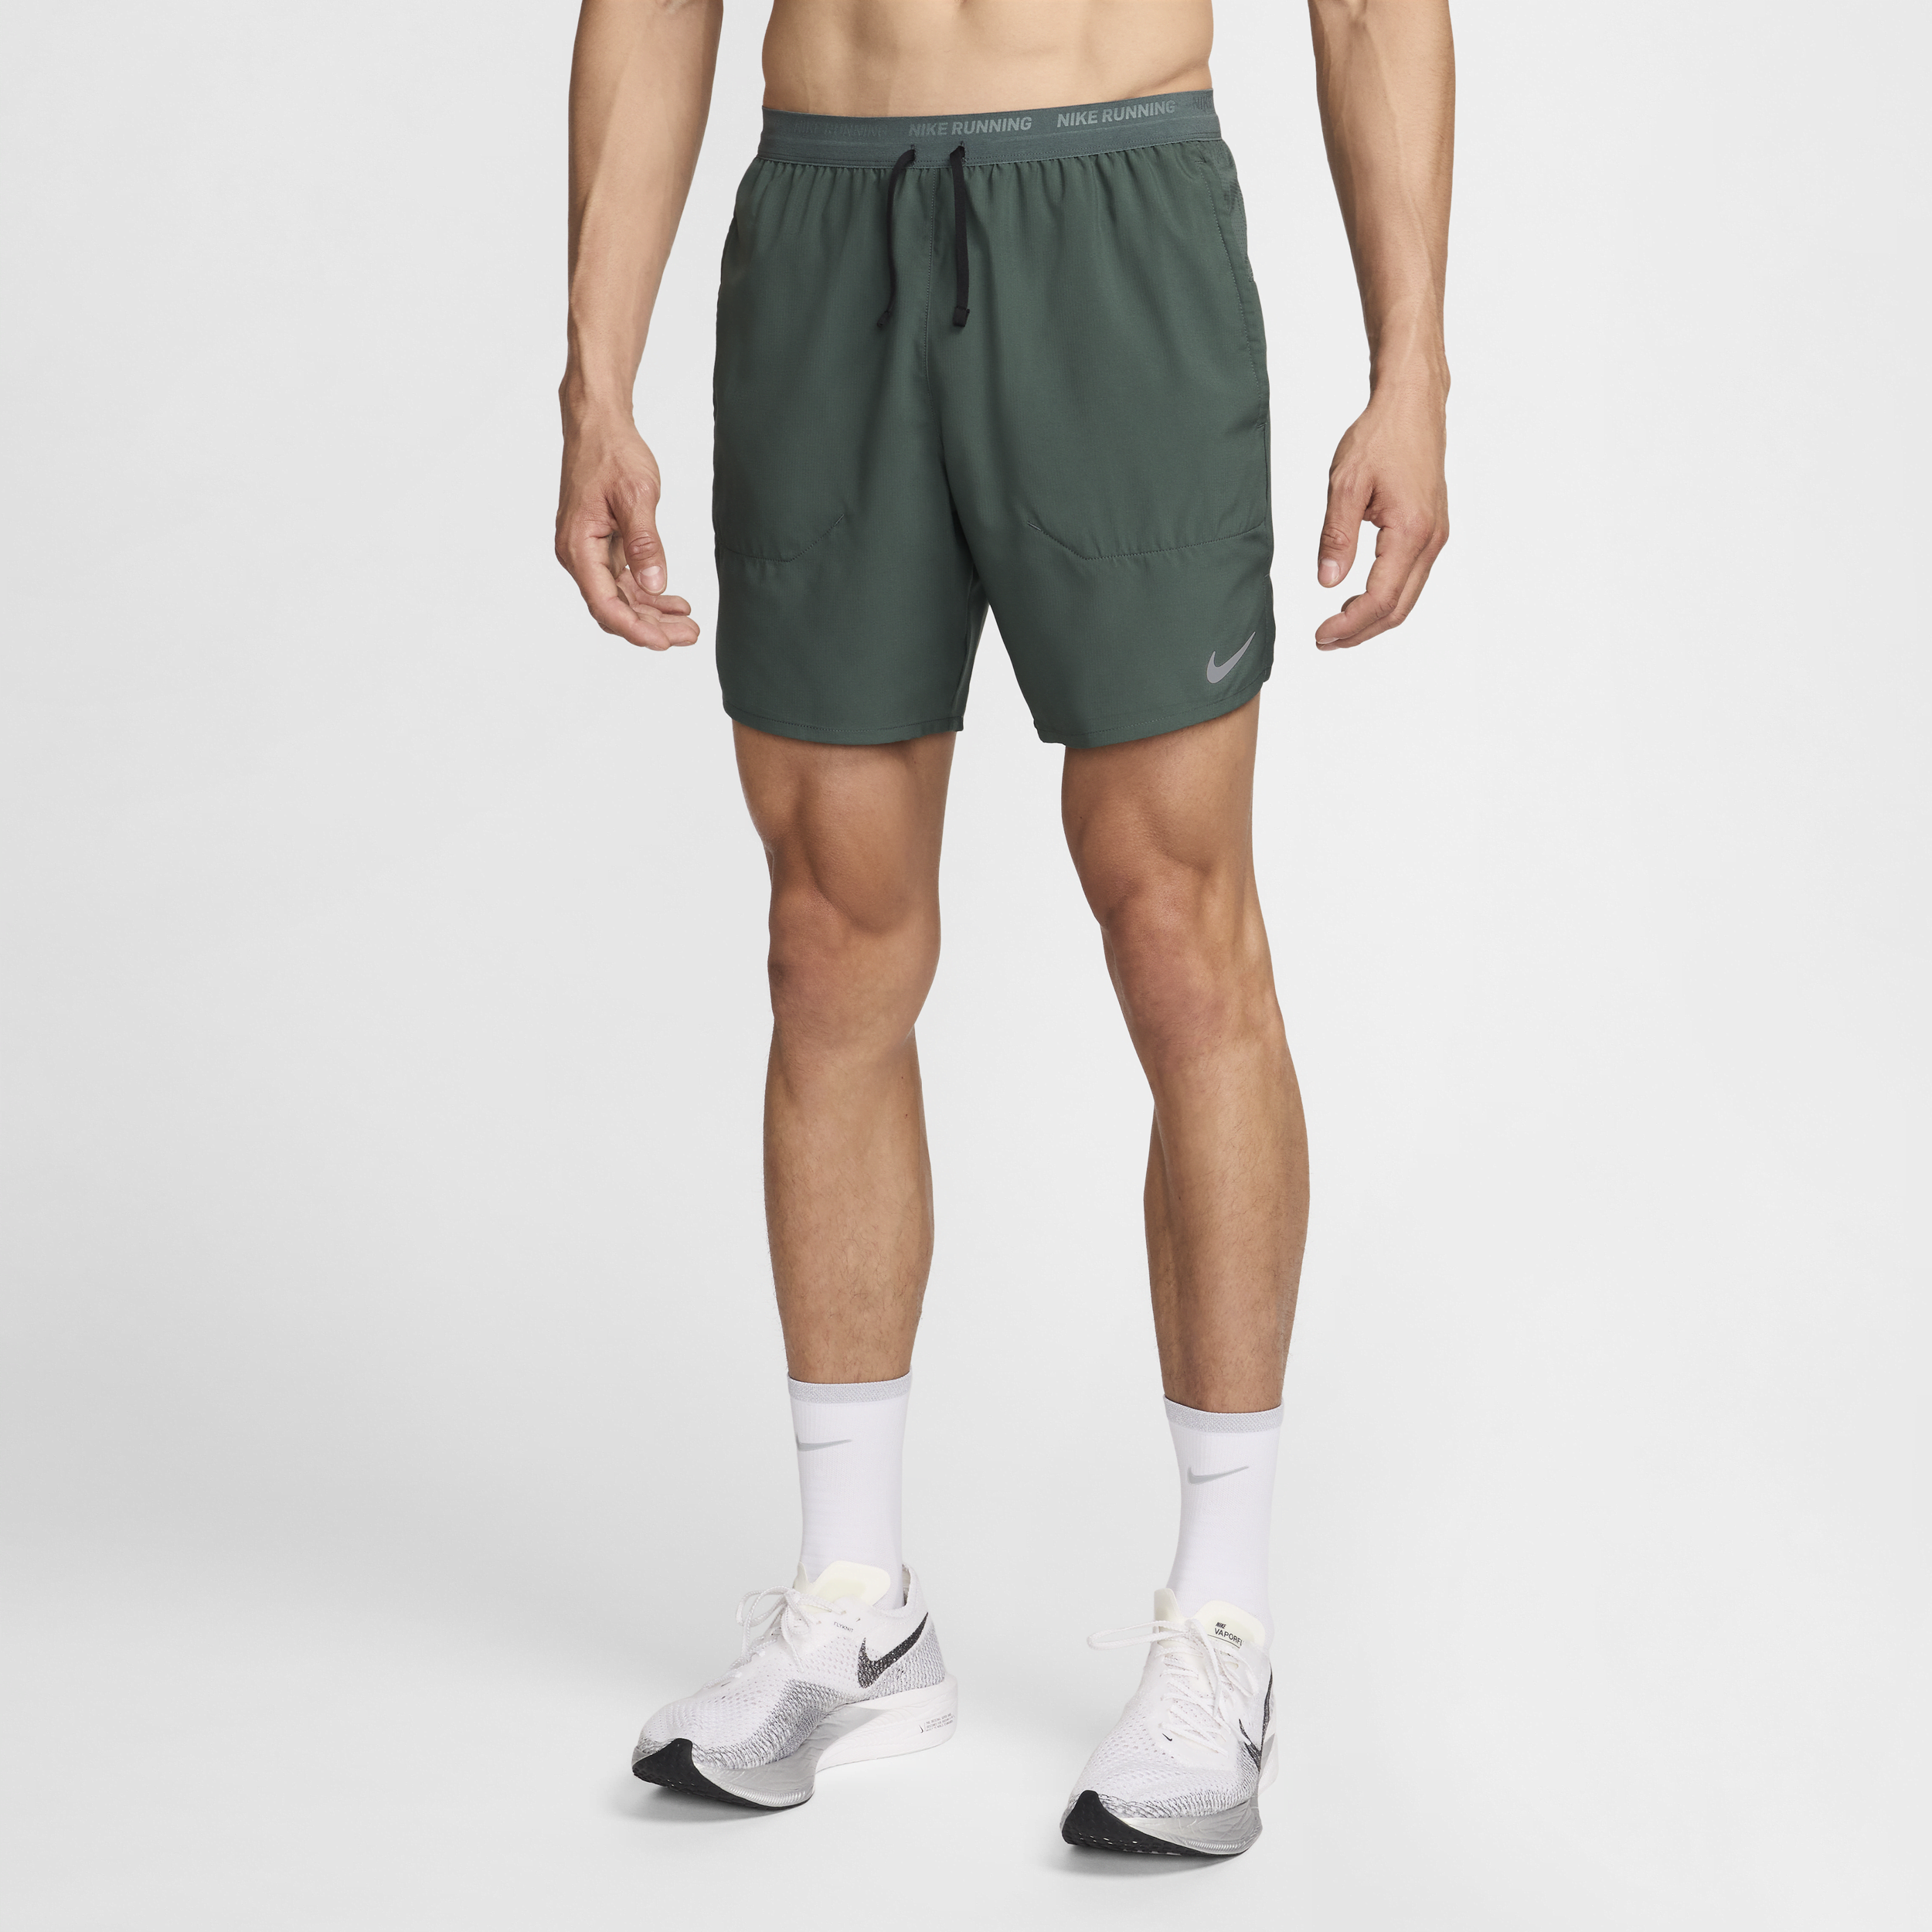 Shorts da running 18 cm con slip foderati Dri-FIT Nike Stride – Uomo - Verde